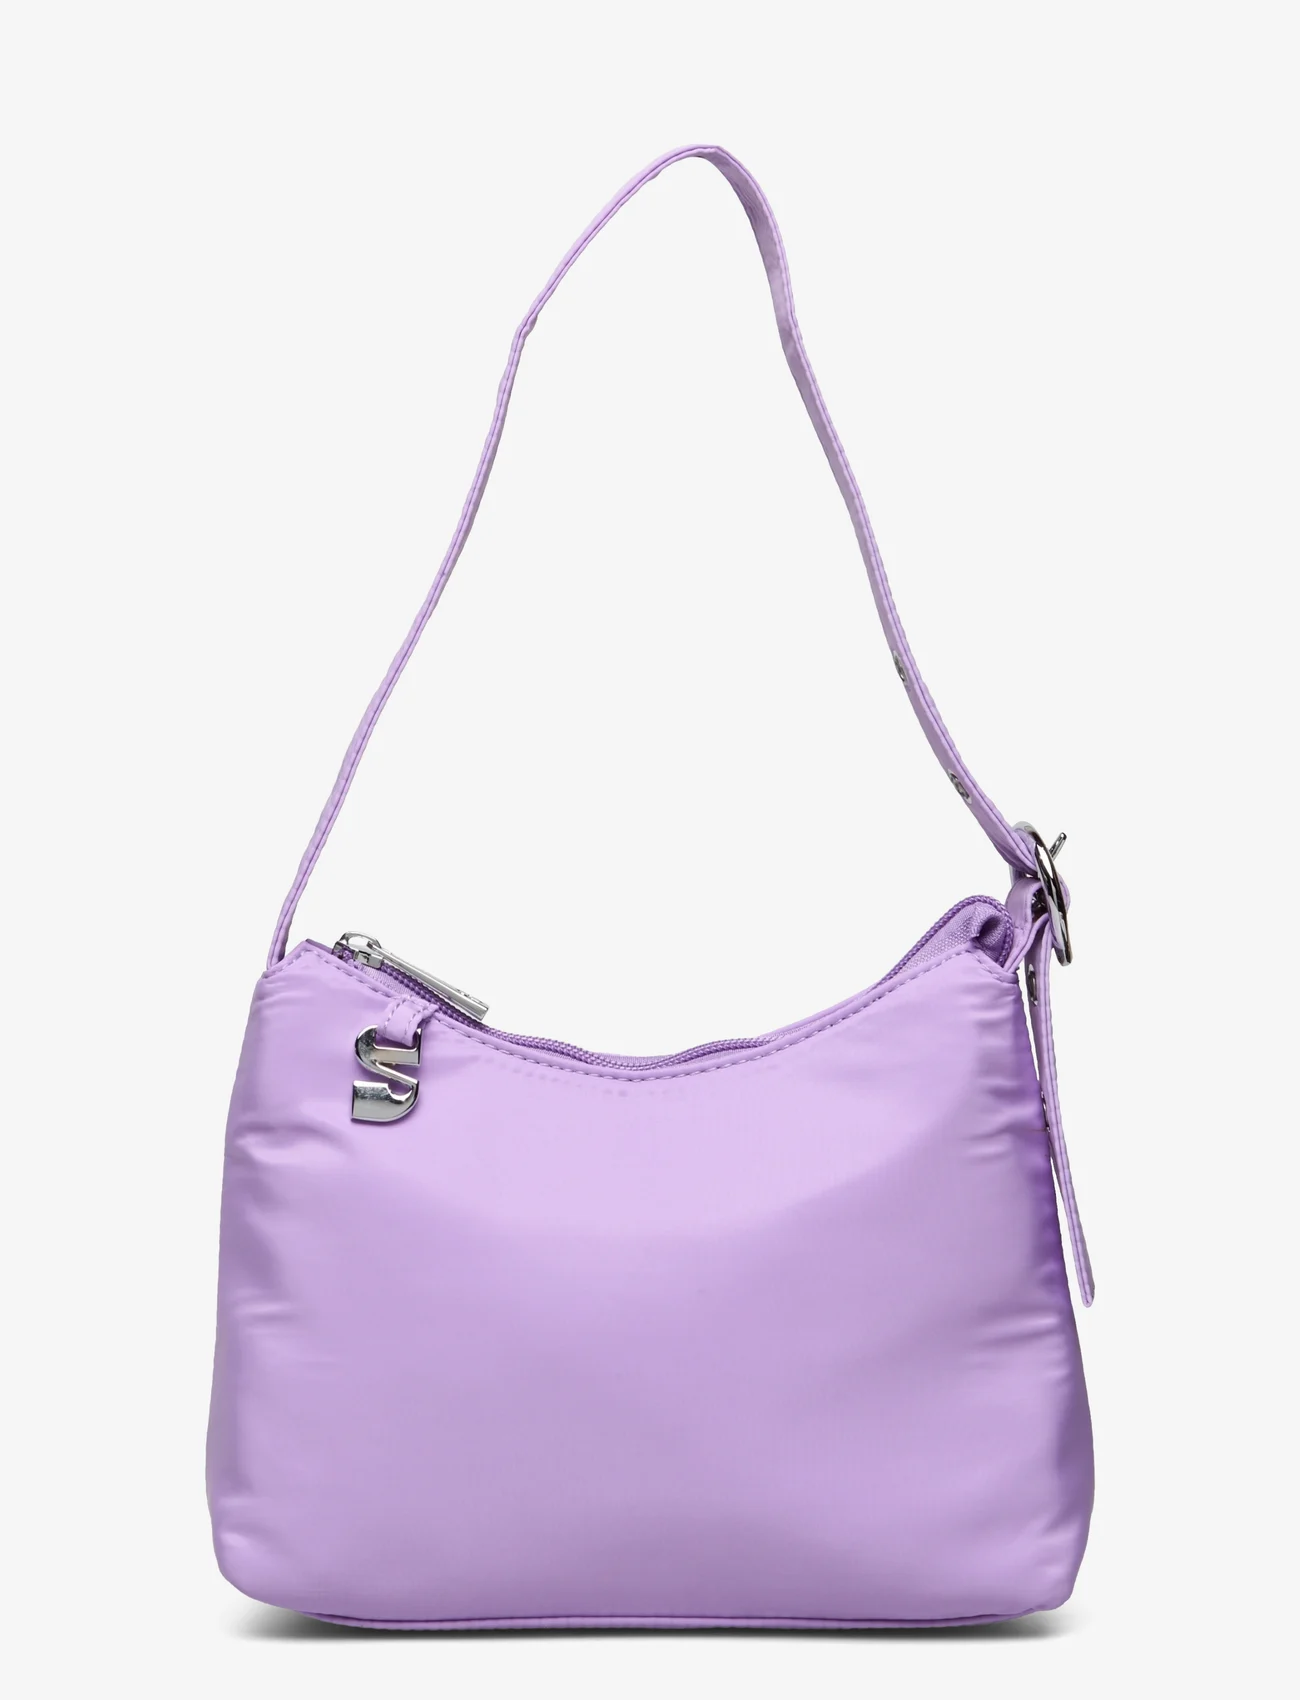 Silfen - Shoulder Bag Ulla - birthday gifts - light purple - 0